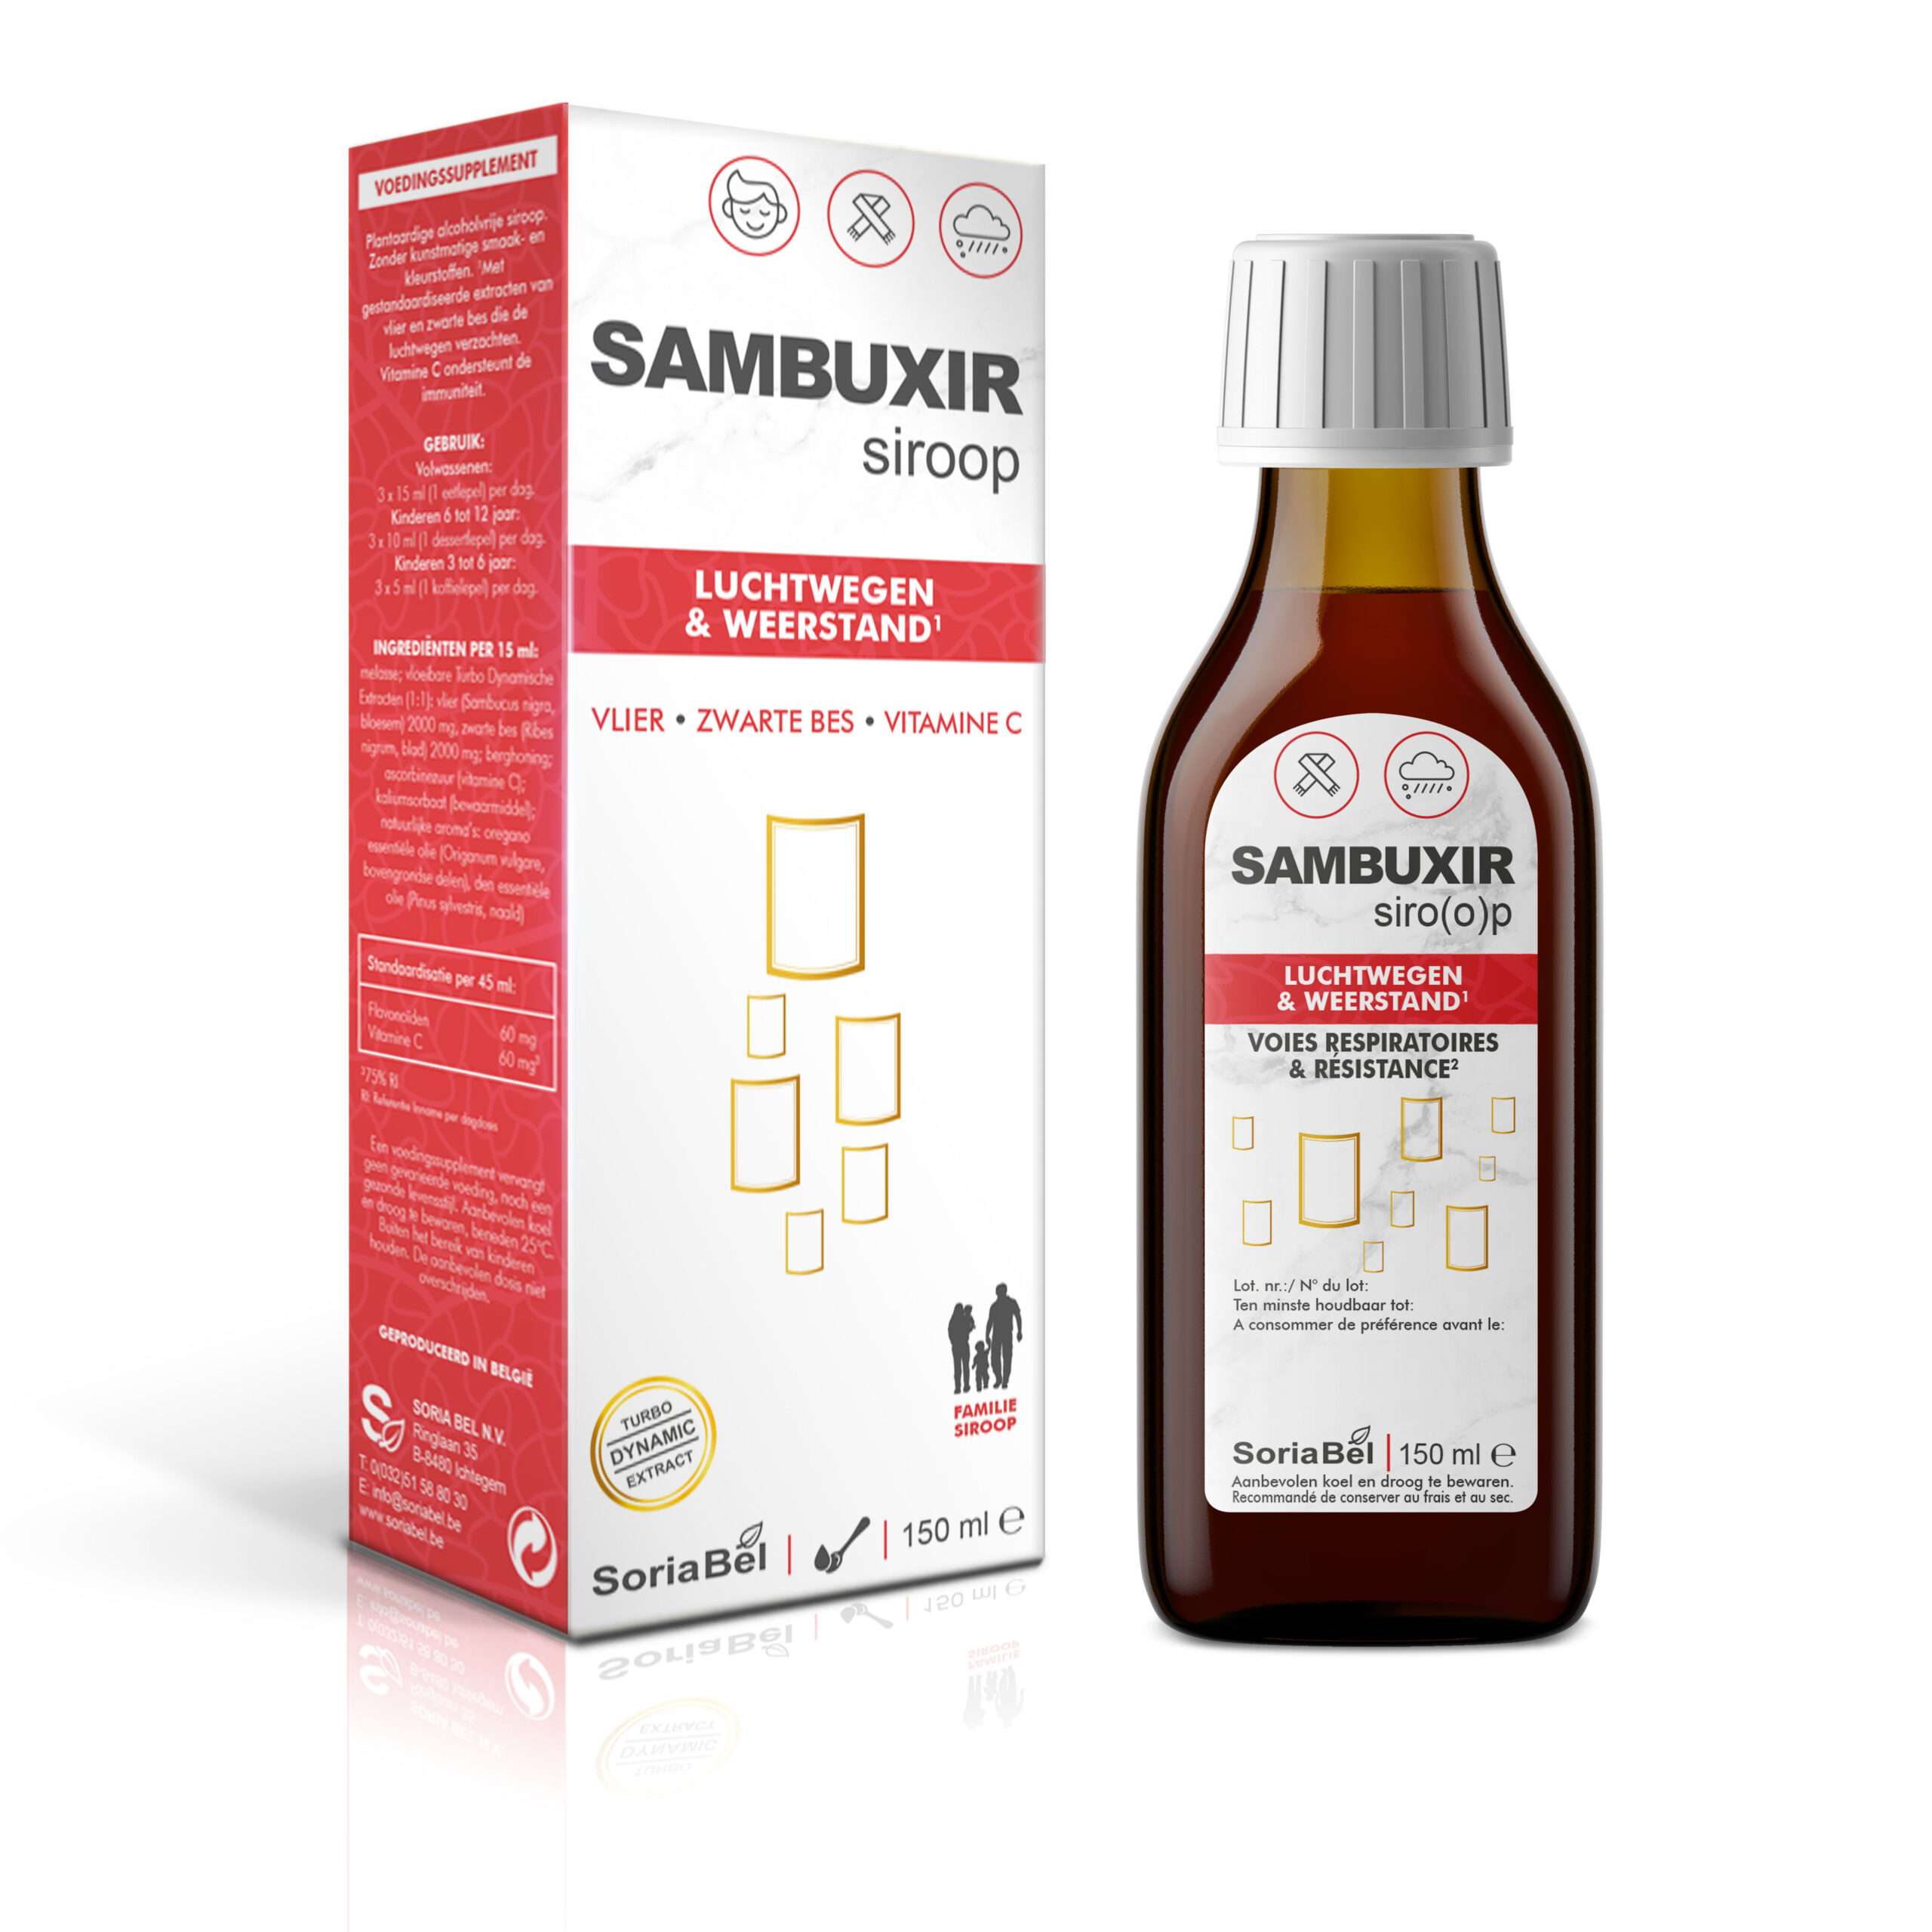 Sambuxir siroop 150 ml